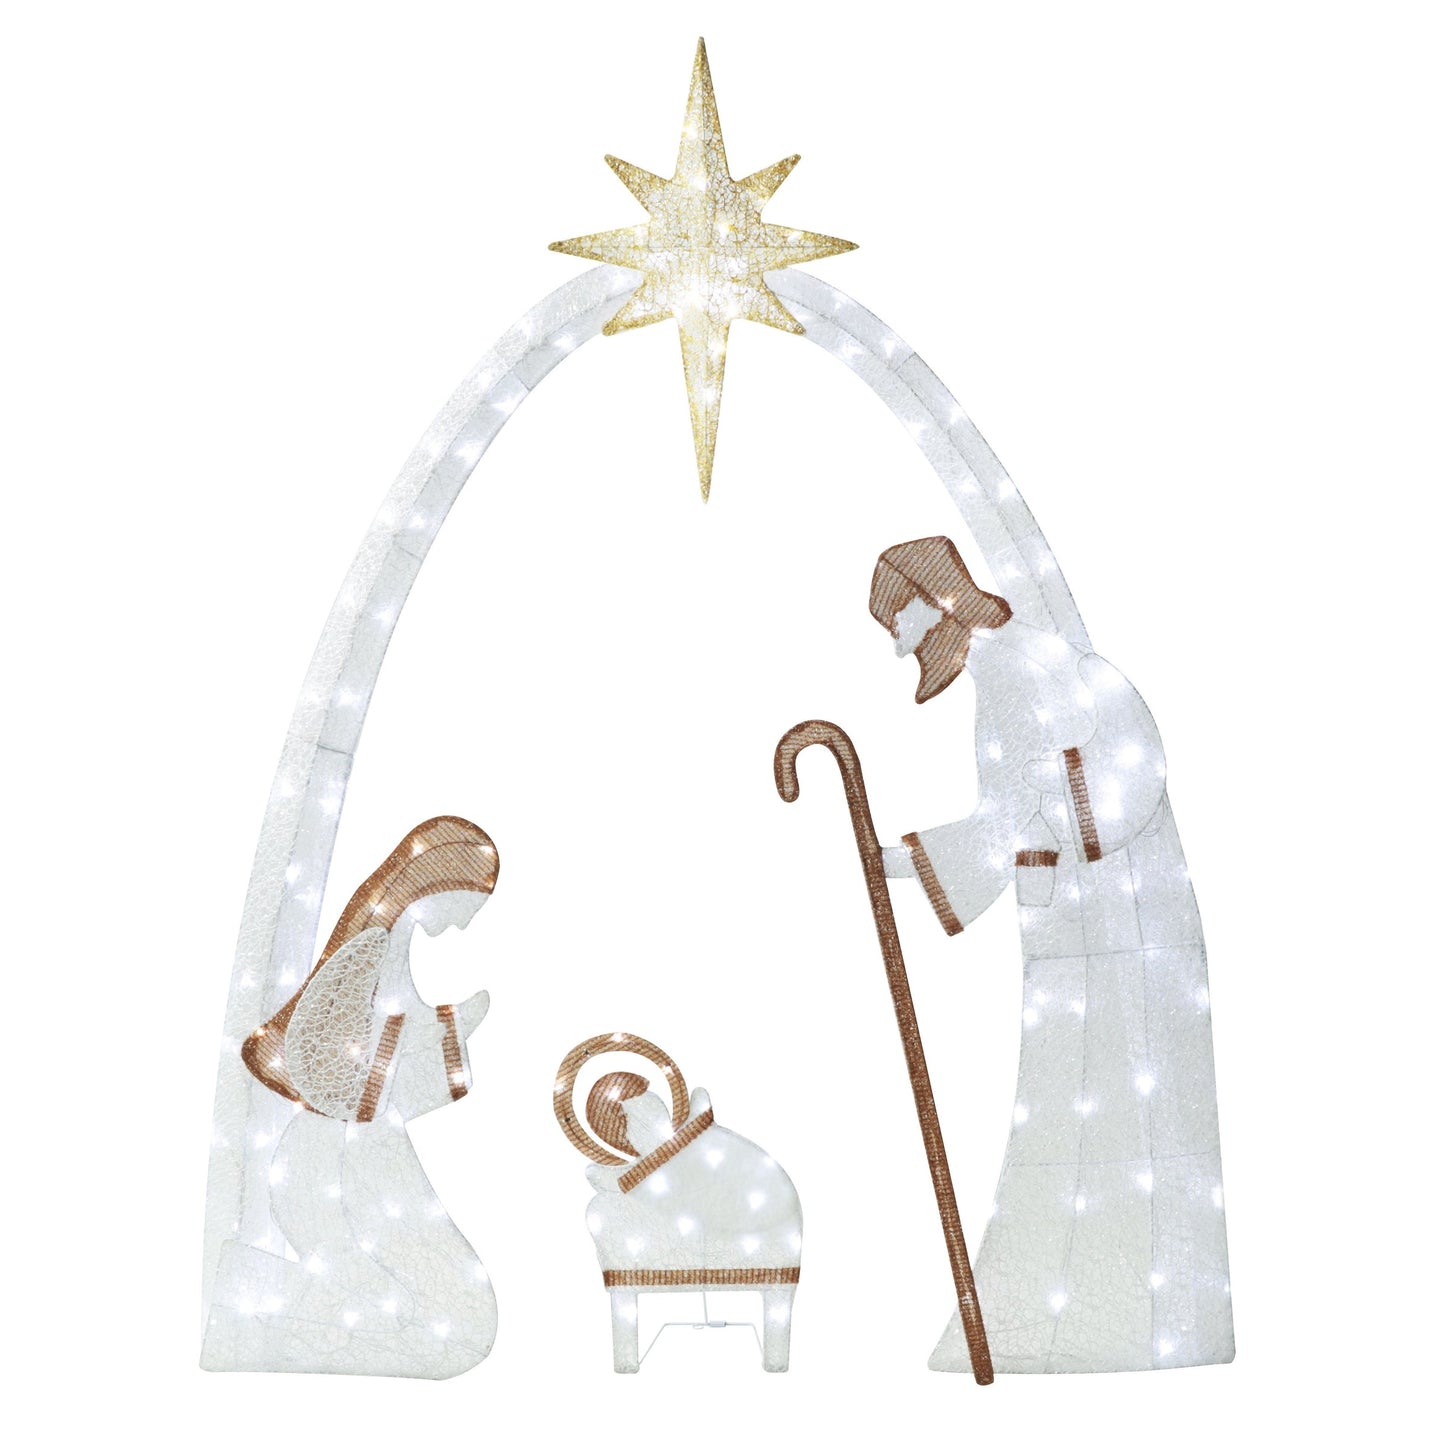 5 ft. Cool White 4 piece LED Nativity scene set Christmas Holiday Yard Decoration. jesus and mary scene, birth of jesus nativity scene